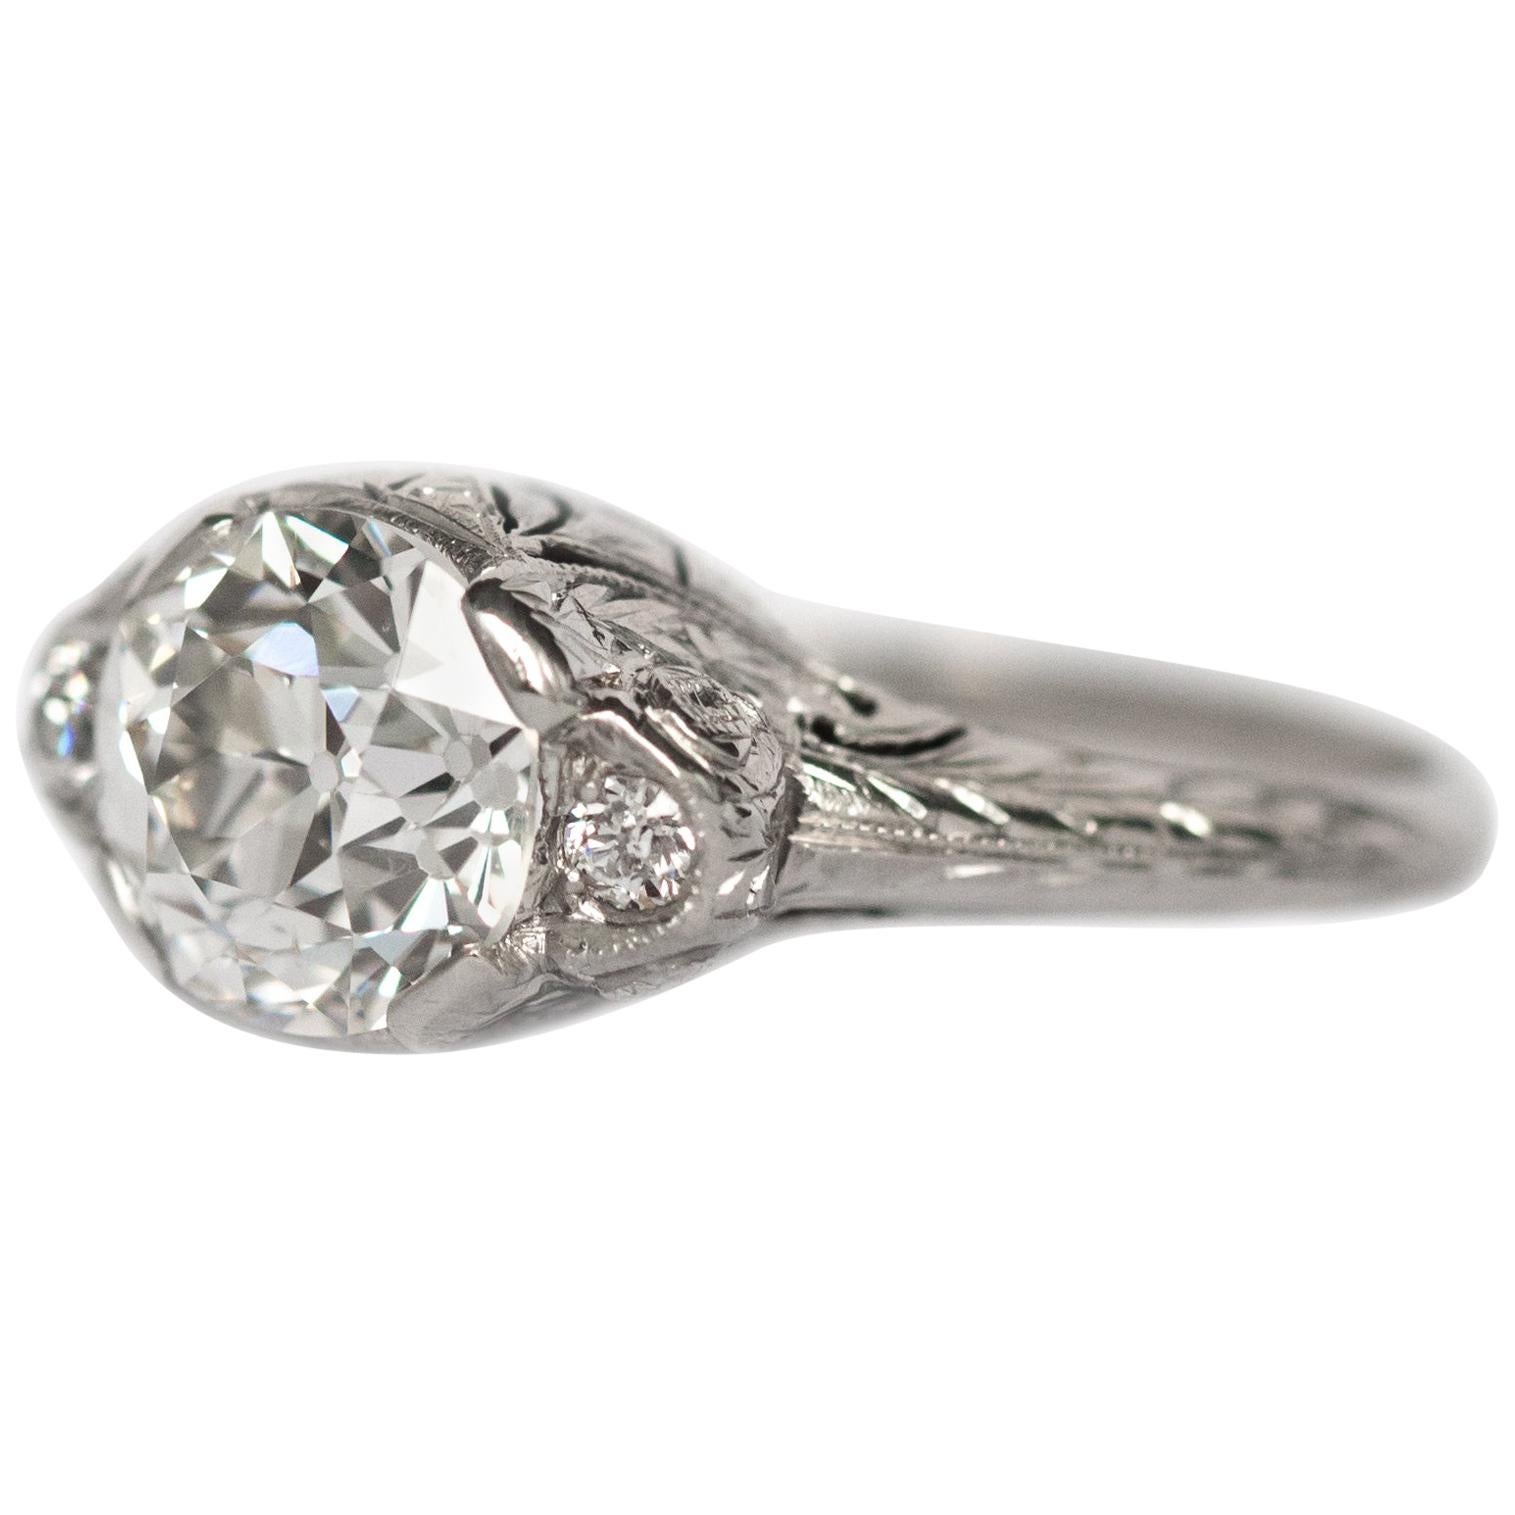 1910 GIA Certified 1.64 Carat Old European Brilliant Cut Diamond Engagement Ring